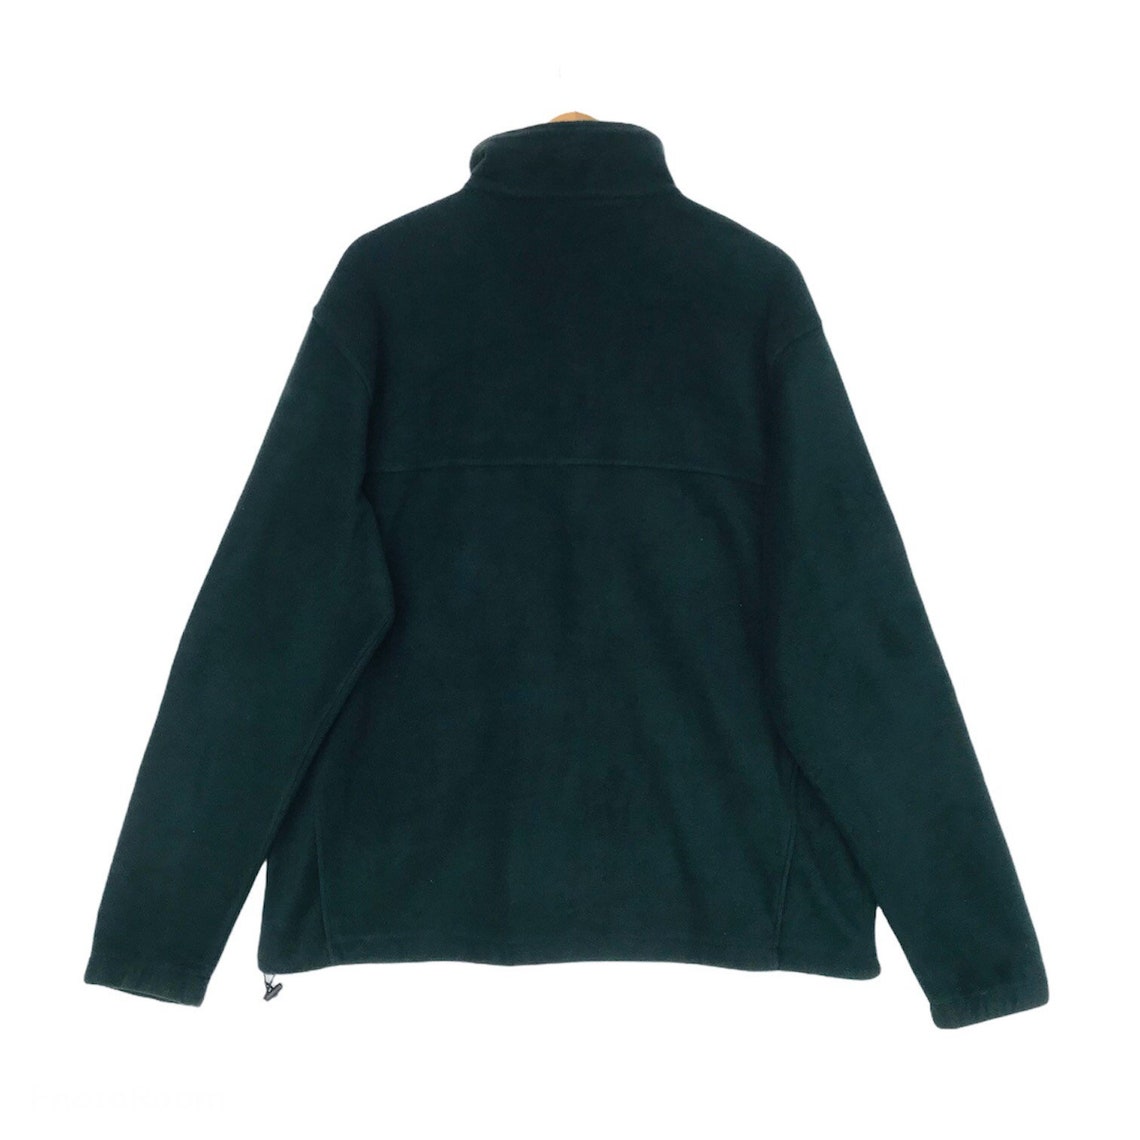 Columbia dark green fleece zip up embroidered logo | Etsy